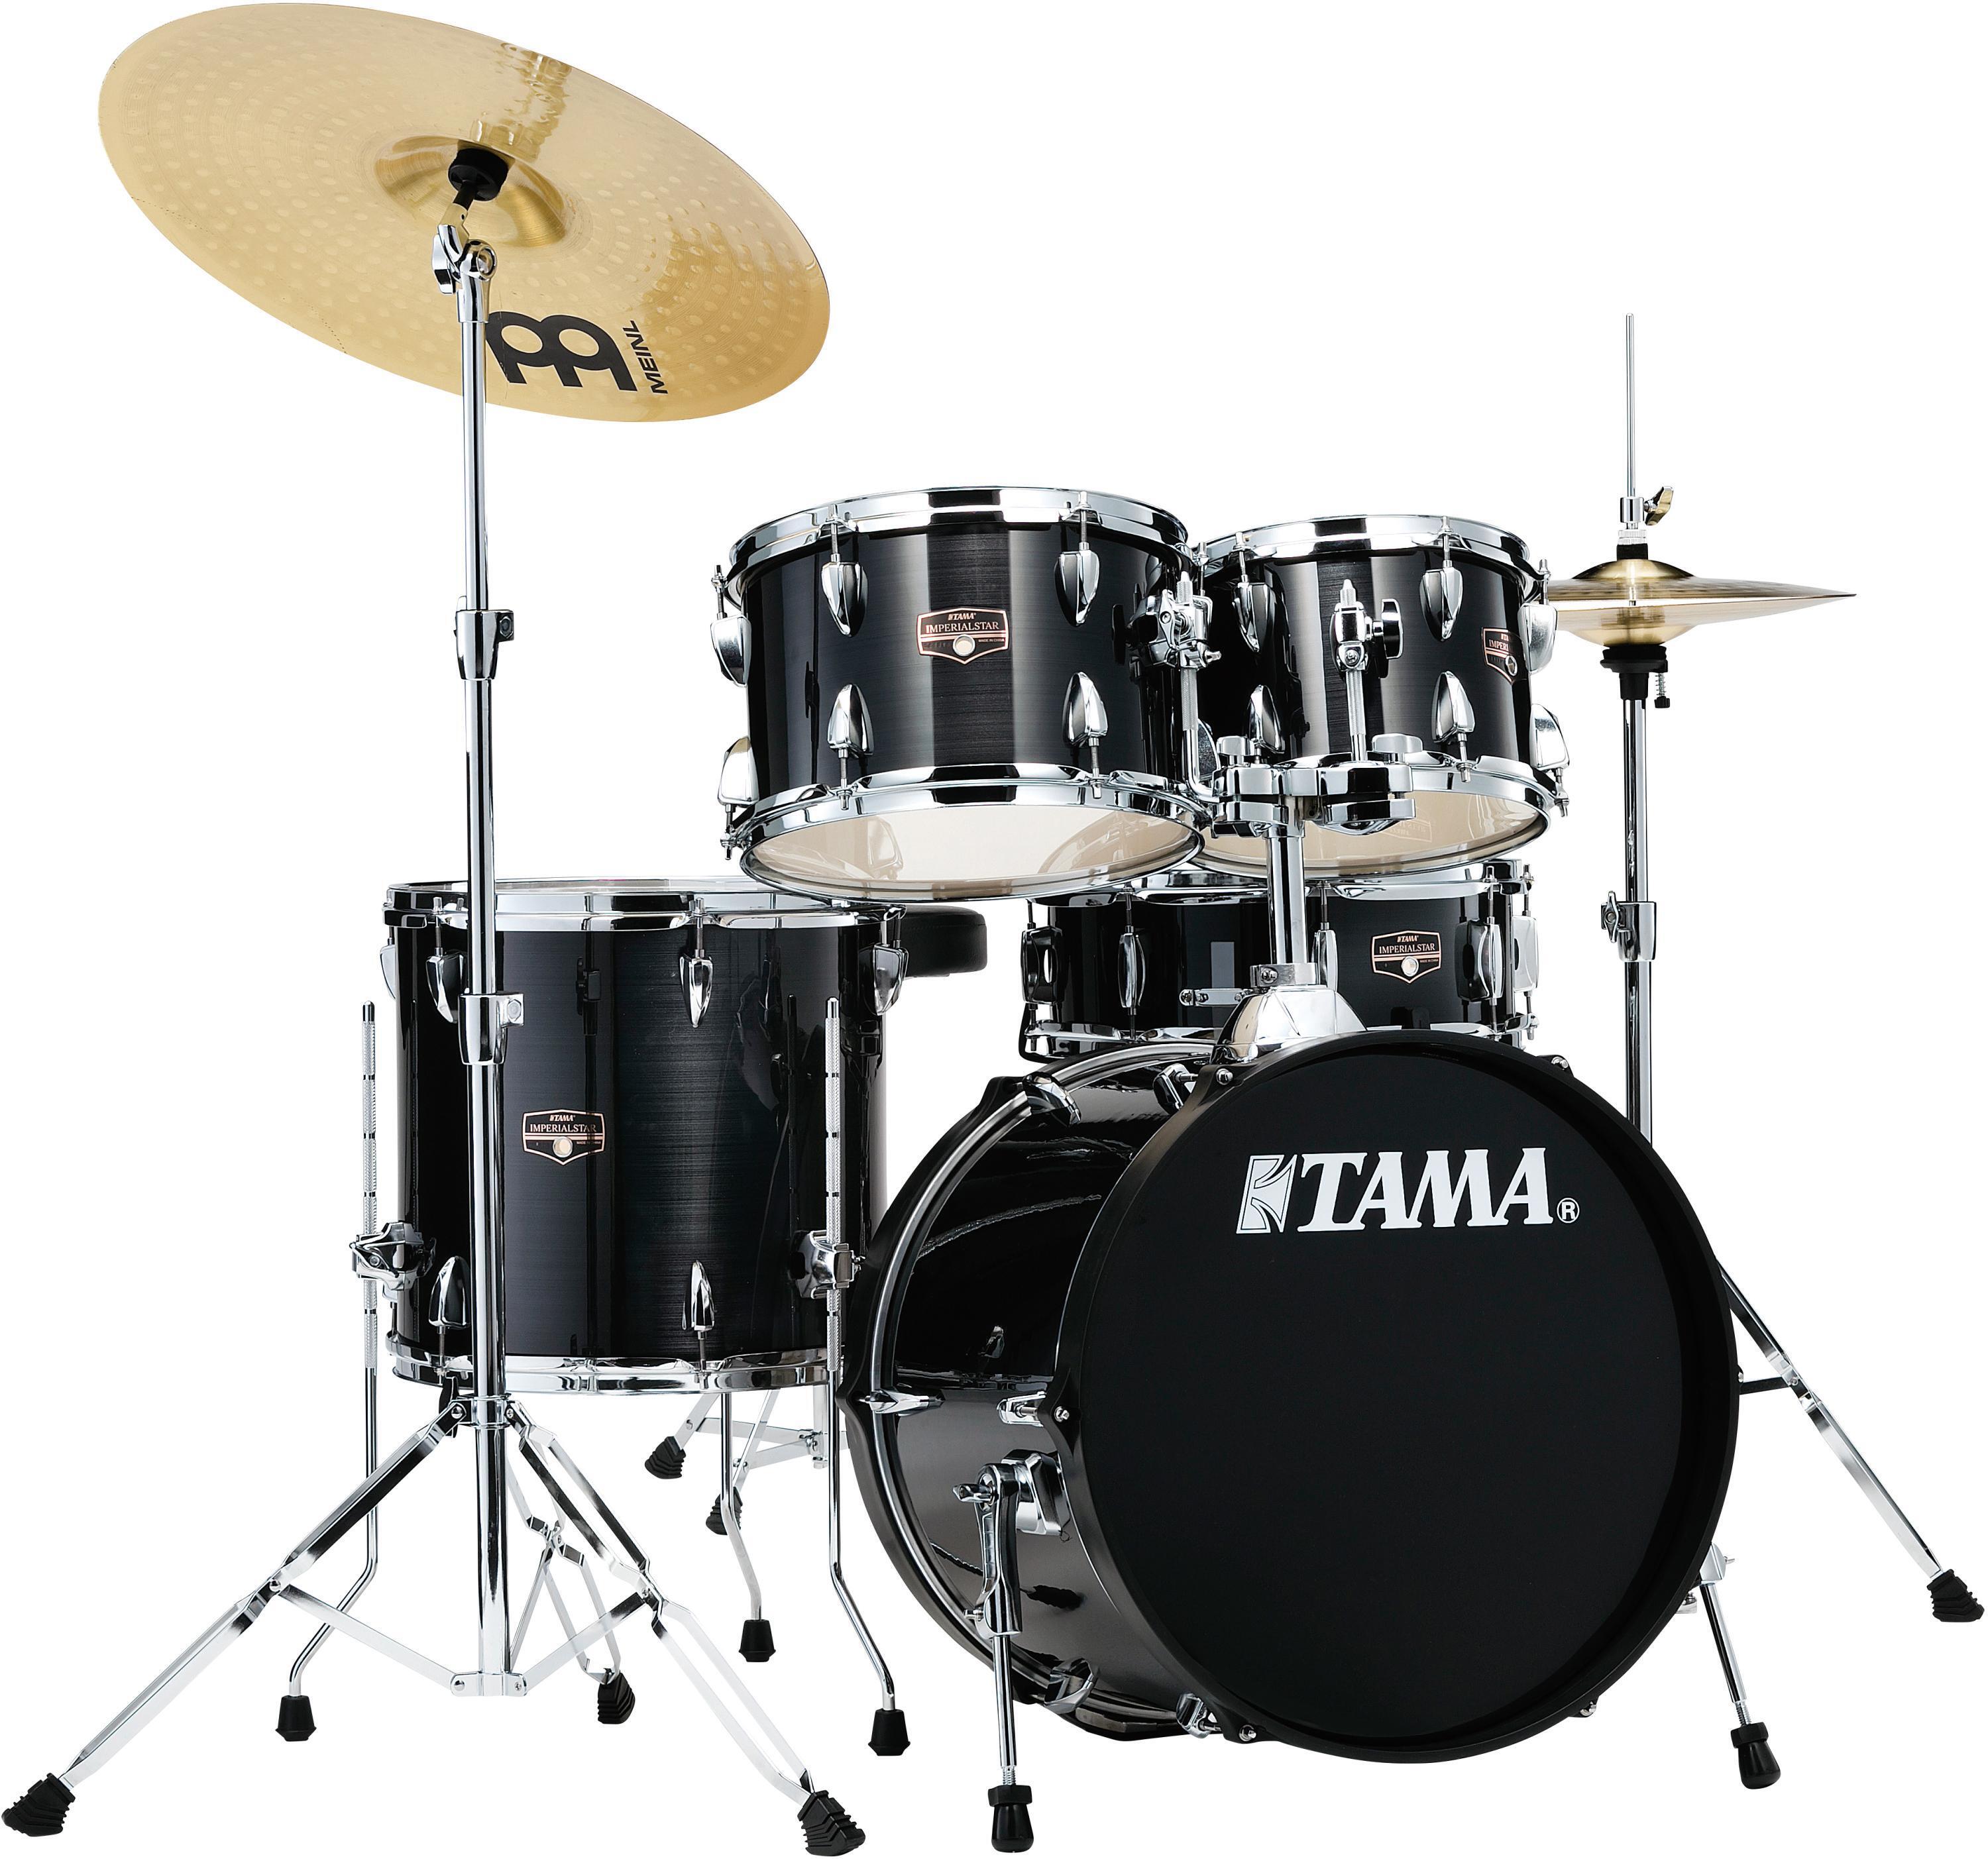 tama 9 piece drum set